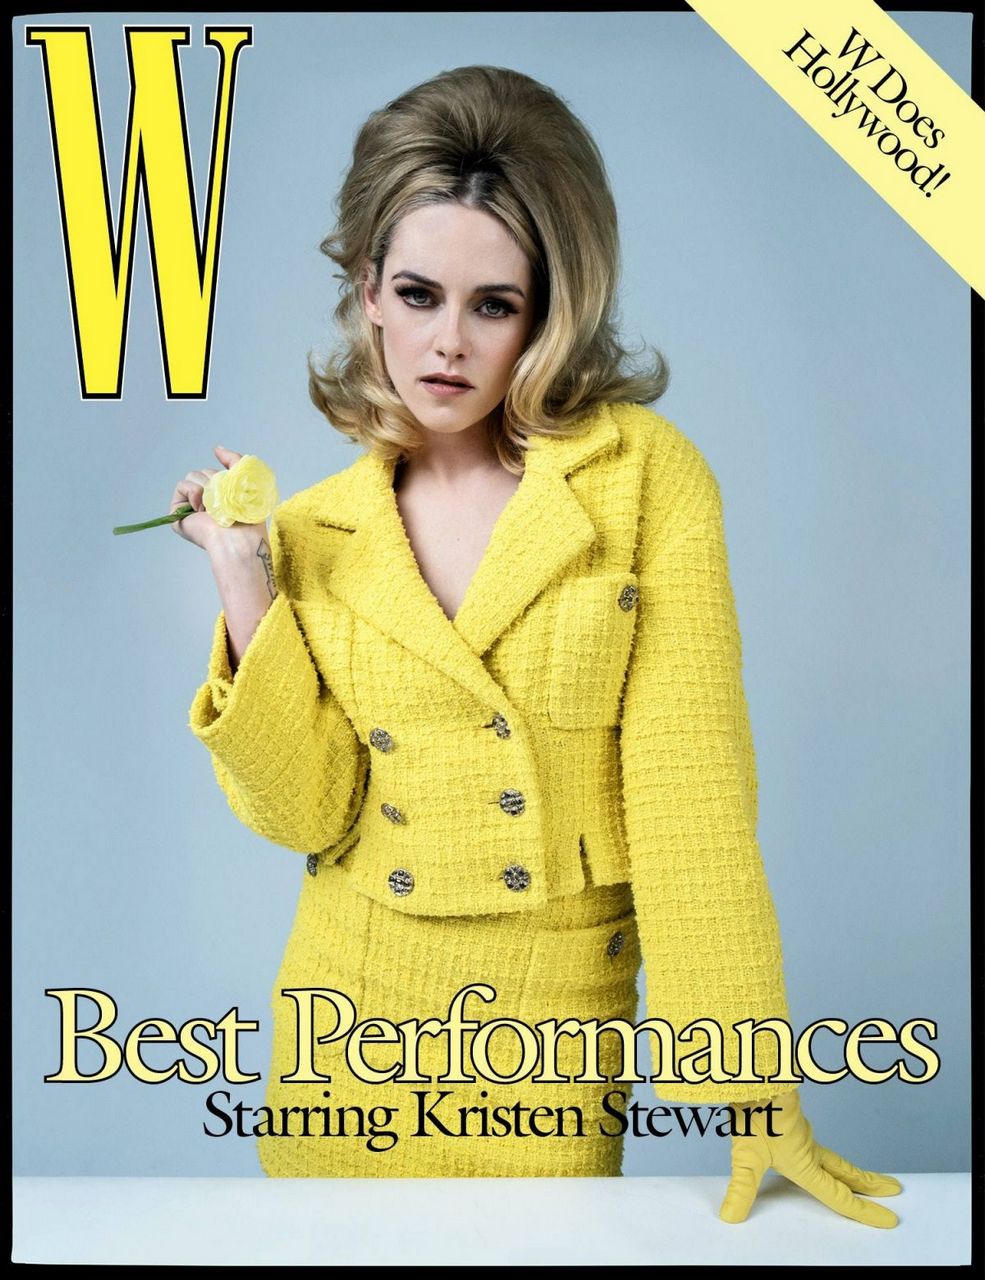 Kristen Stewart For W Magazine Best Performances Issue January